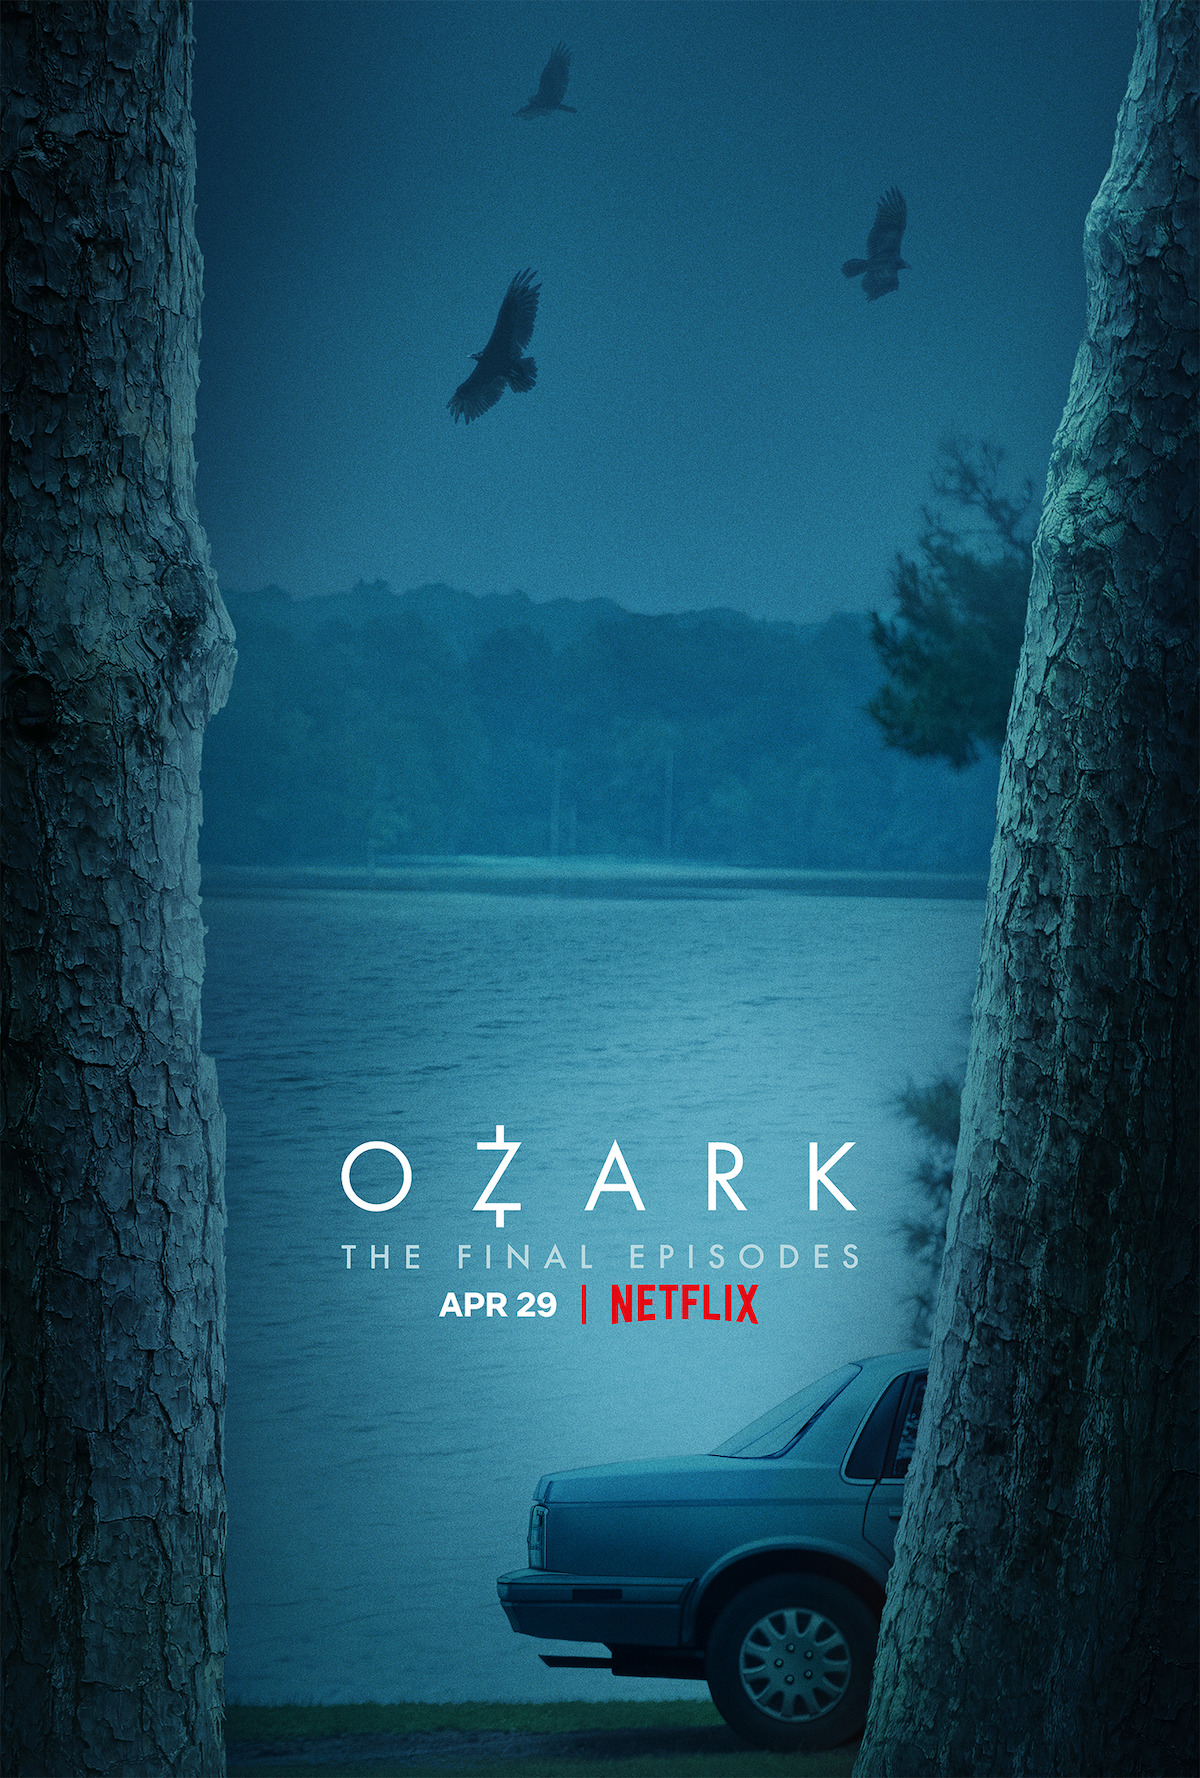 Ozark Season 2 Is Closer Than You Think